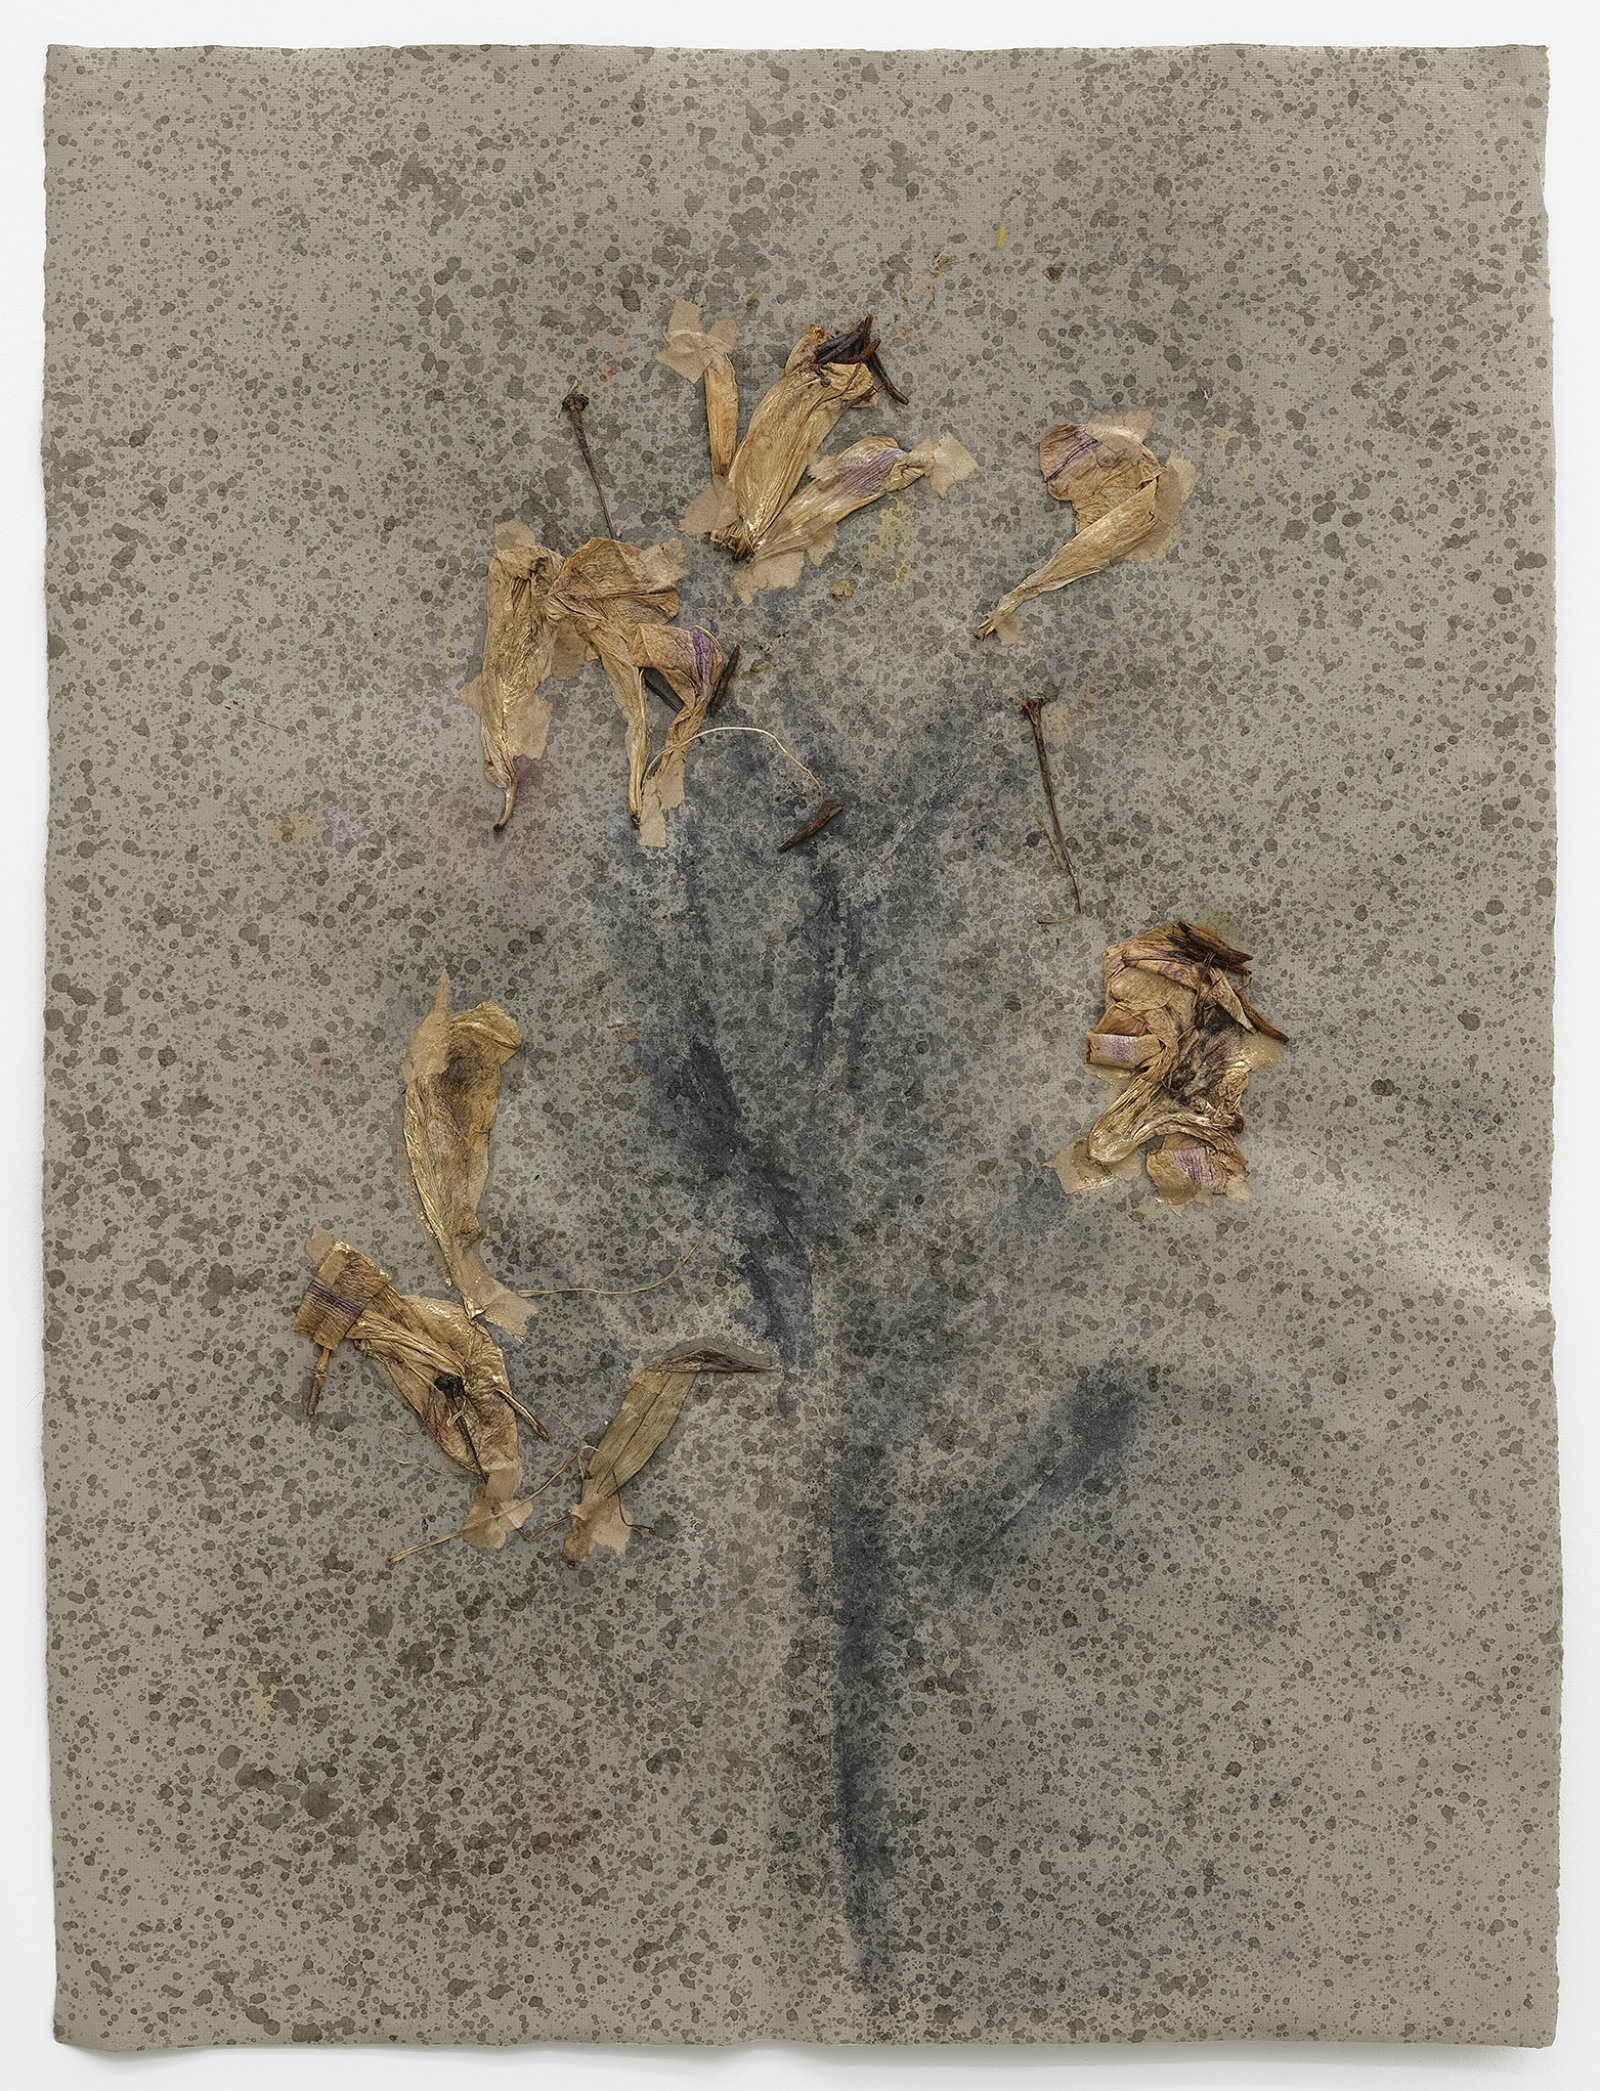 Rochelle Goldberg, Bouquet, insufficient (detail), 2021, pressed flower, graphite, pastel, bronze dust, shellac, on paper, 196 x 19 in. (498 x 47 cm)